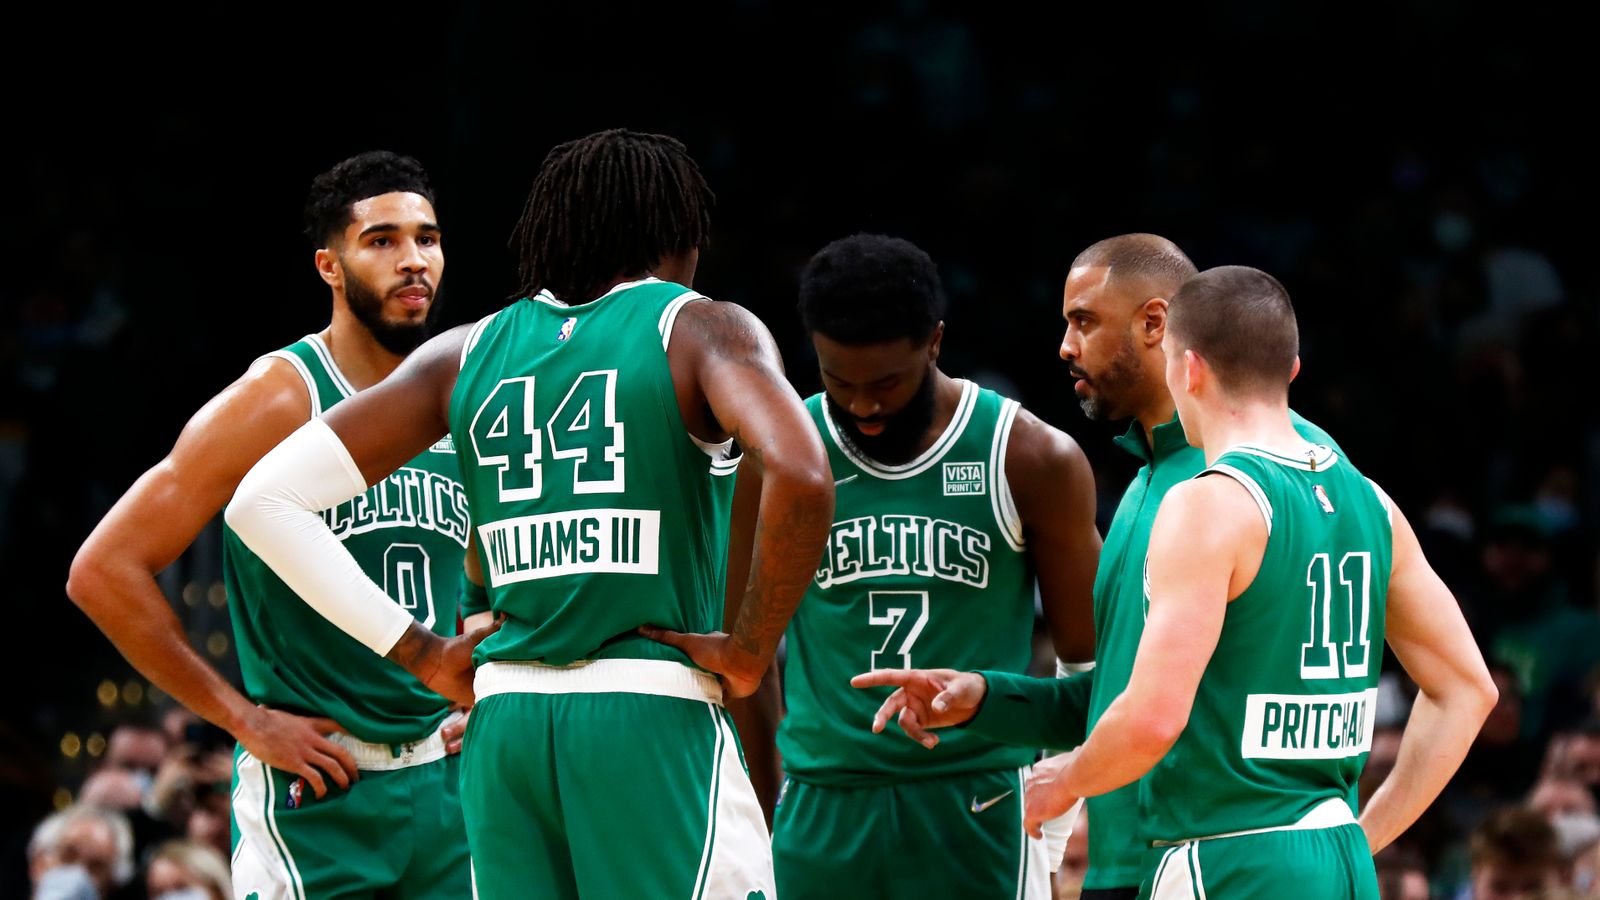 Cunningham scores 25, but Celtics get revenge over Pistons